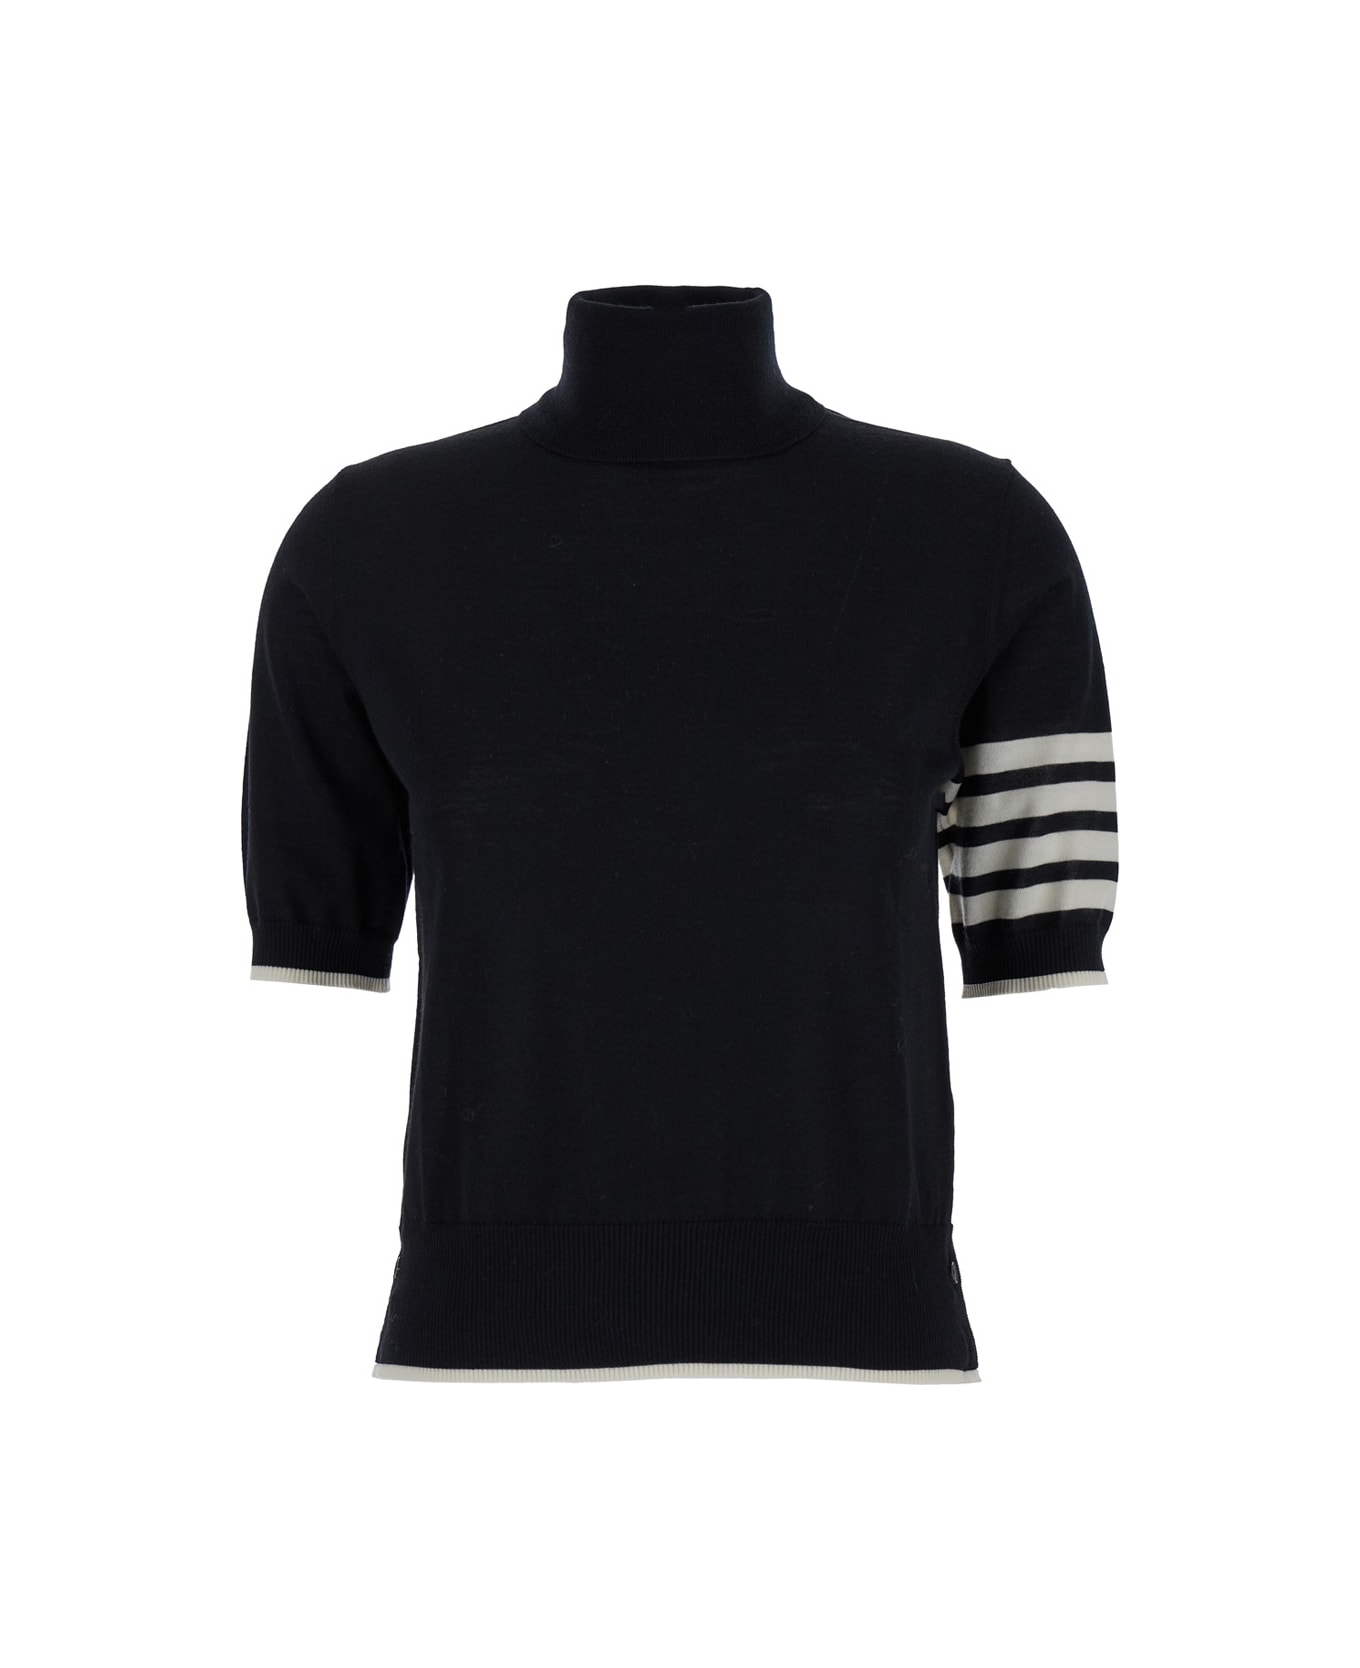 Thom Browne Black Short Sleeve Sweater With 4-bar Detail In Wool Woman - Black